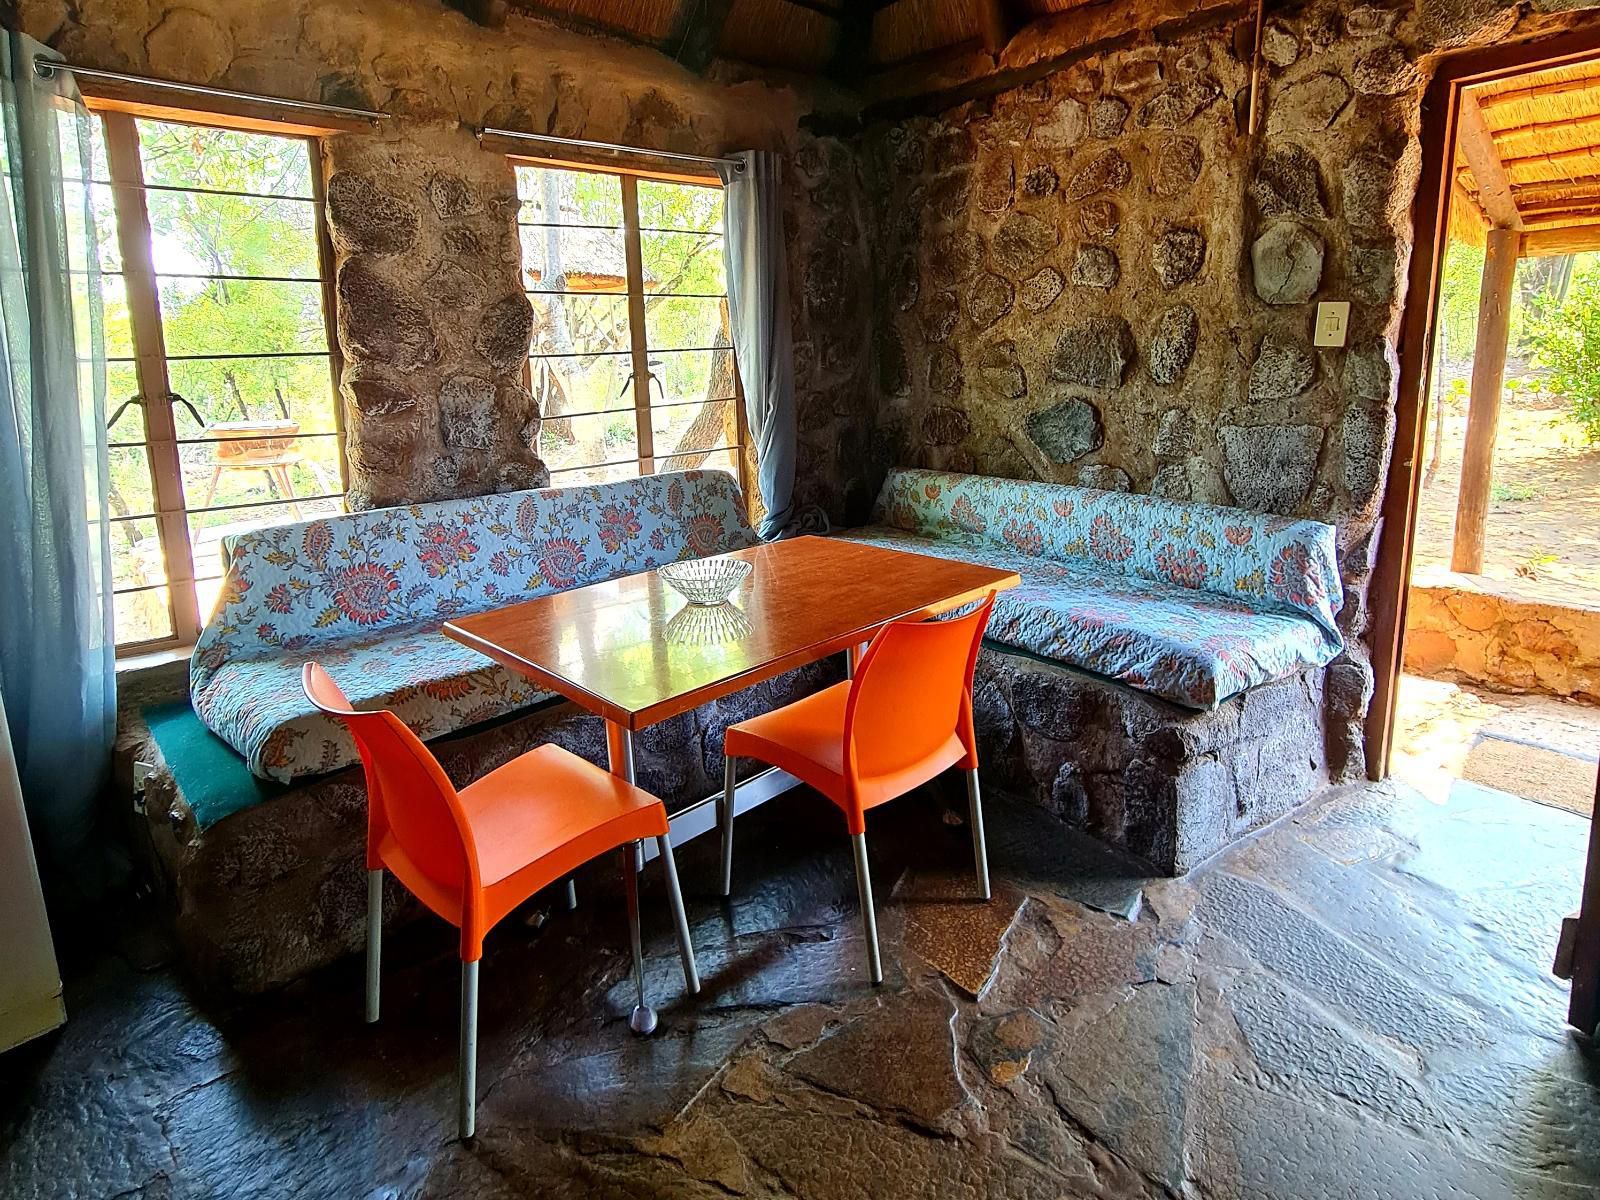 Uitvlugt Resort Rust De Winter Limpopo Province South Africa Cabin, Building, Architecture